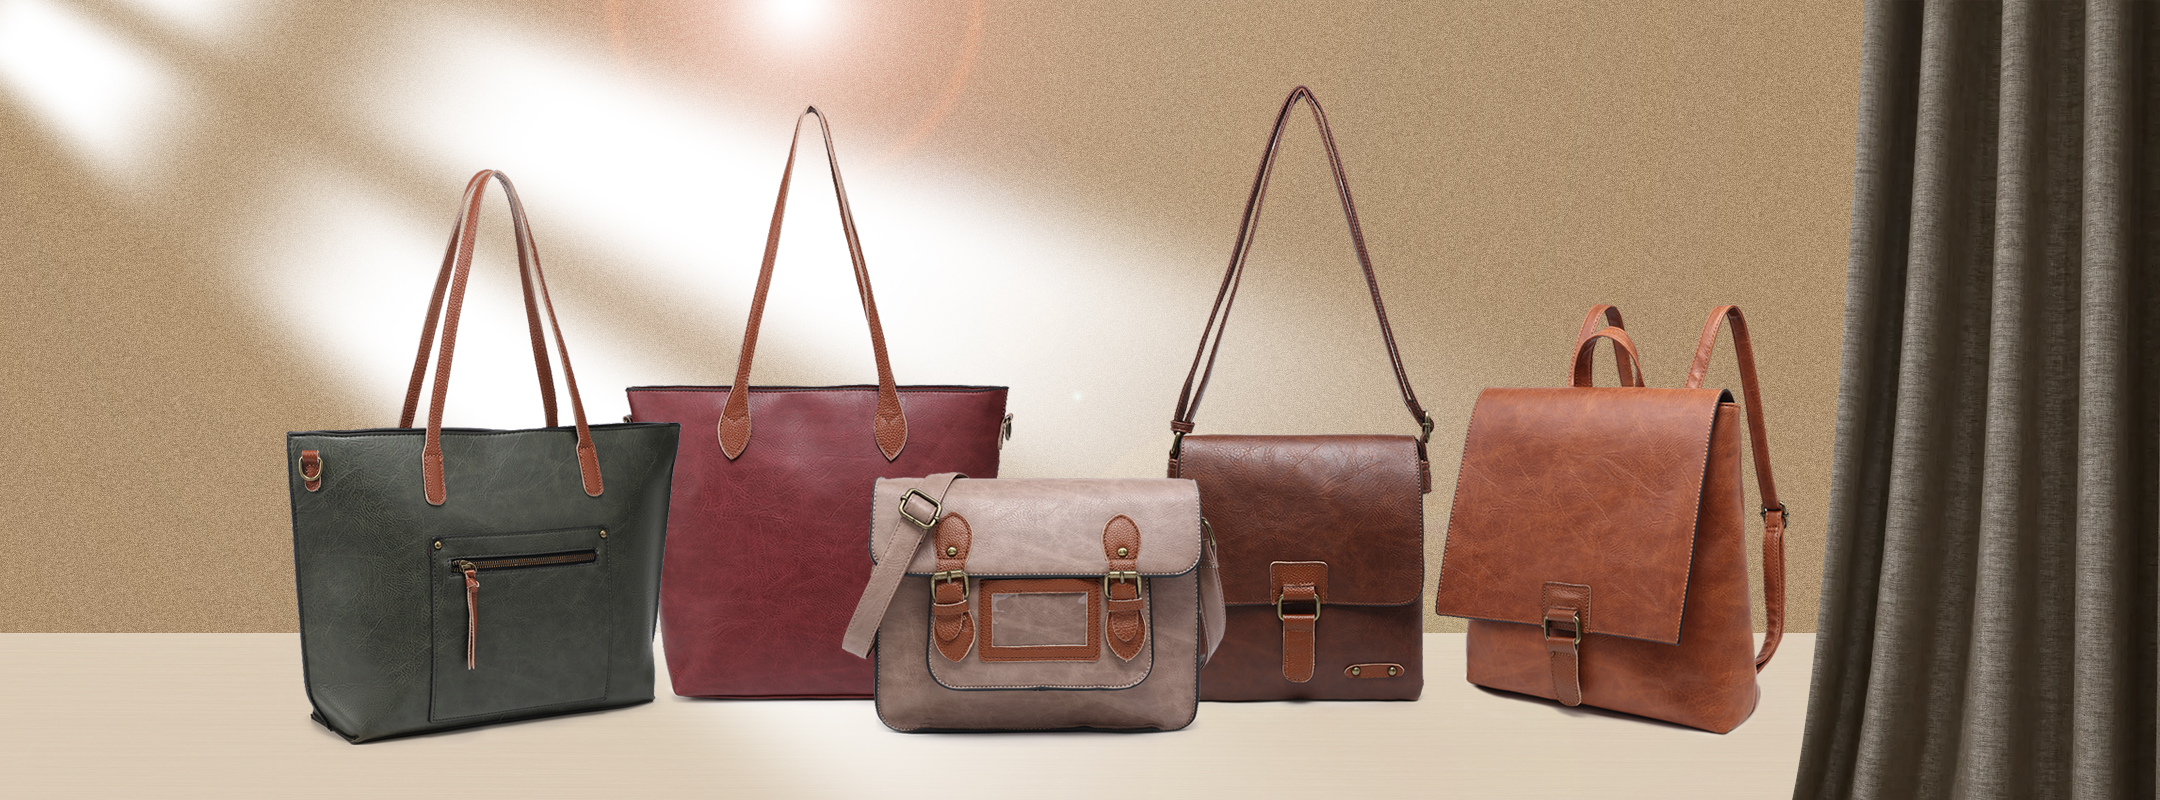 Women's Bags New Models - Spain, New - The wholesale platform | Merkandi B2B